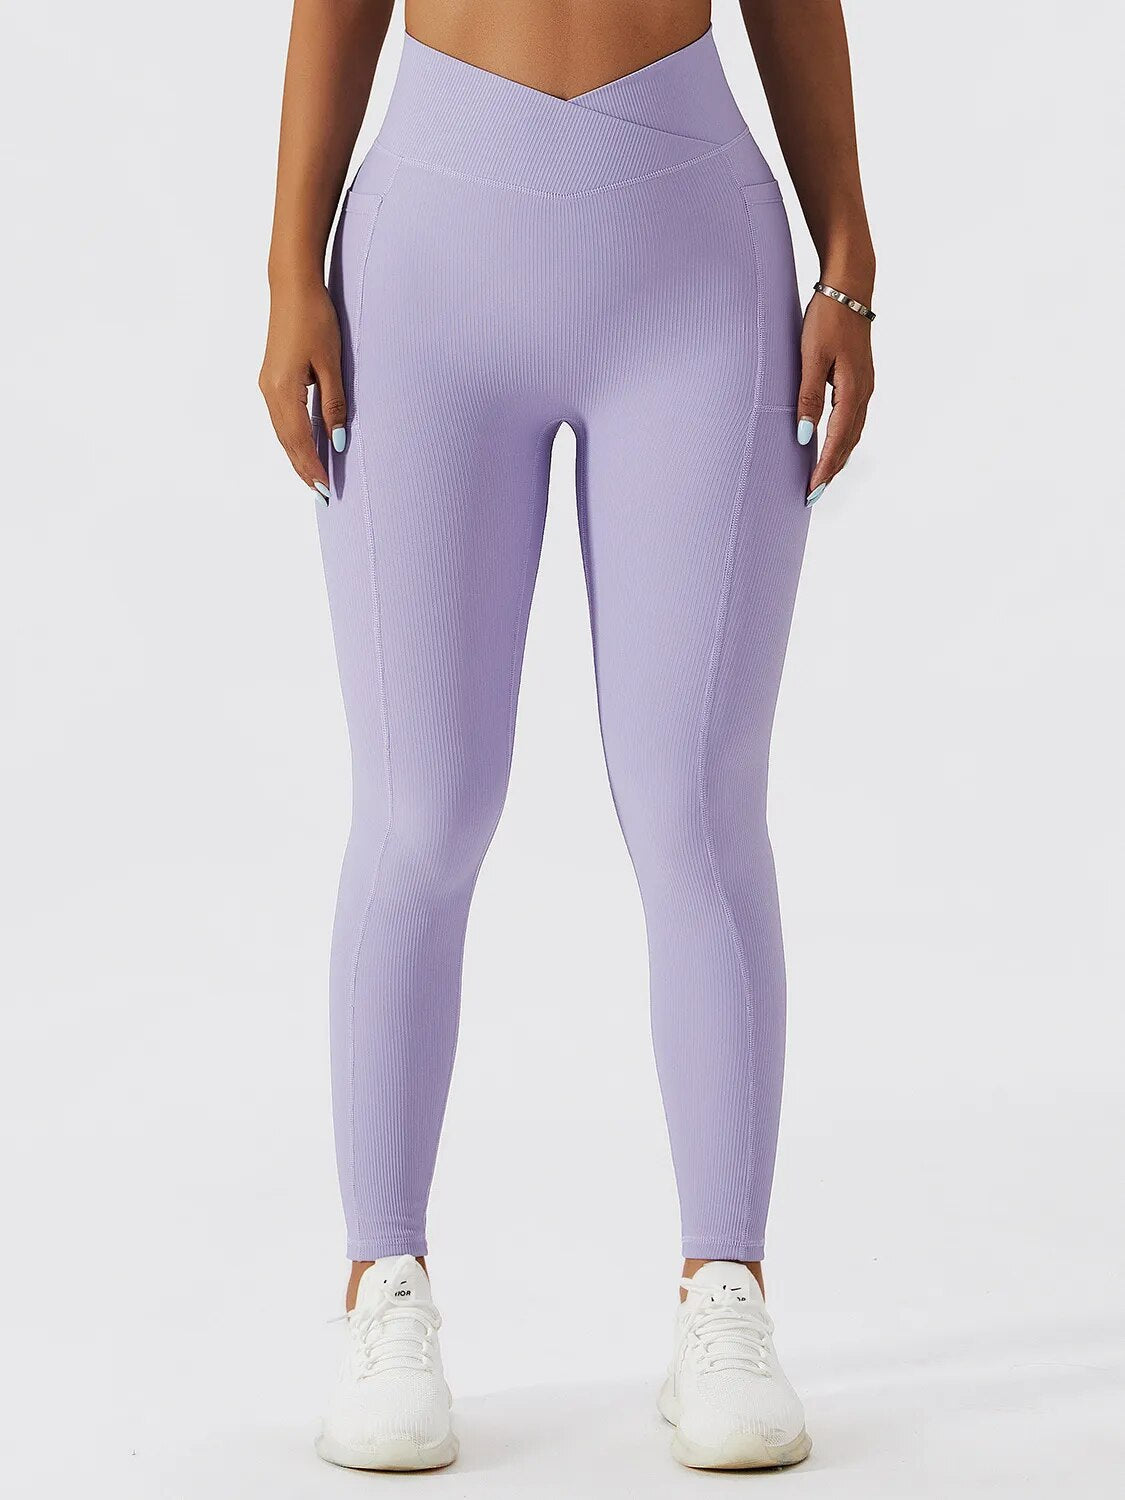 Wholesale Creamy Soft Purple Mist Leggings - USA Fashion